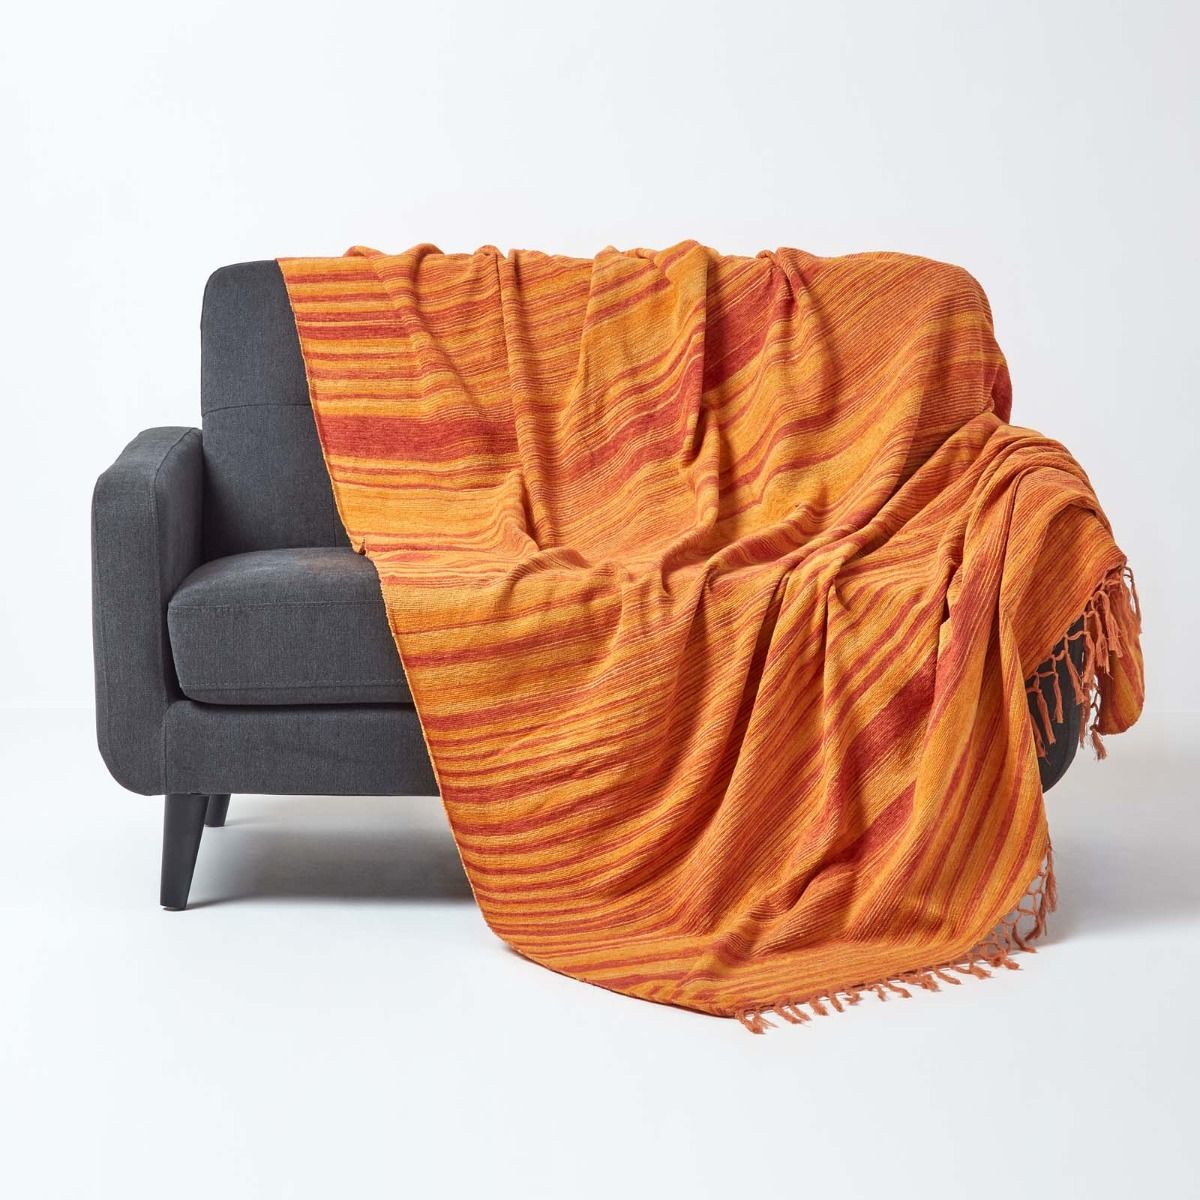 Jacquard Chenille Woodstock rustikal gestreift Sofa/Bett Überwurf Decke oder Kissen 